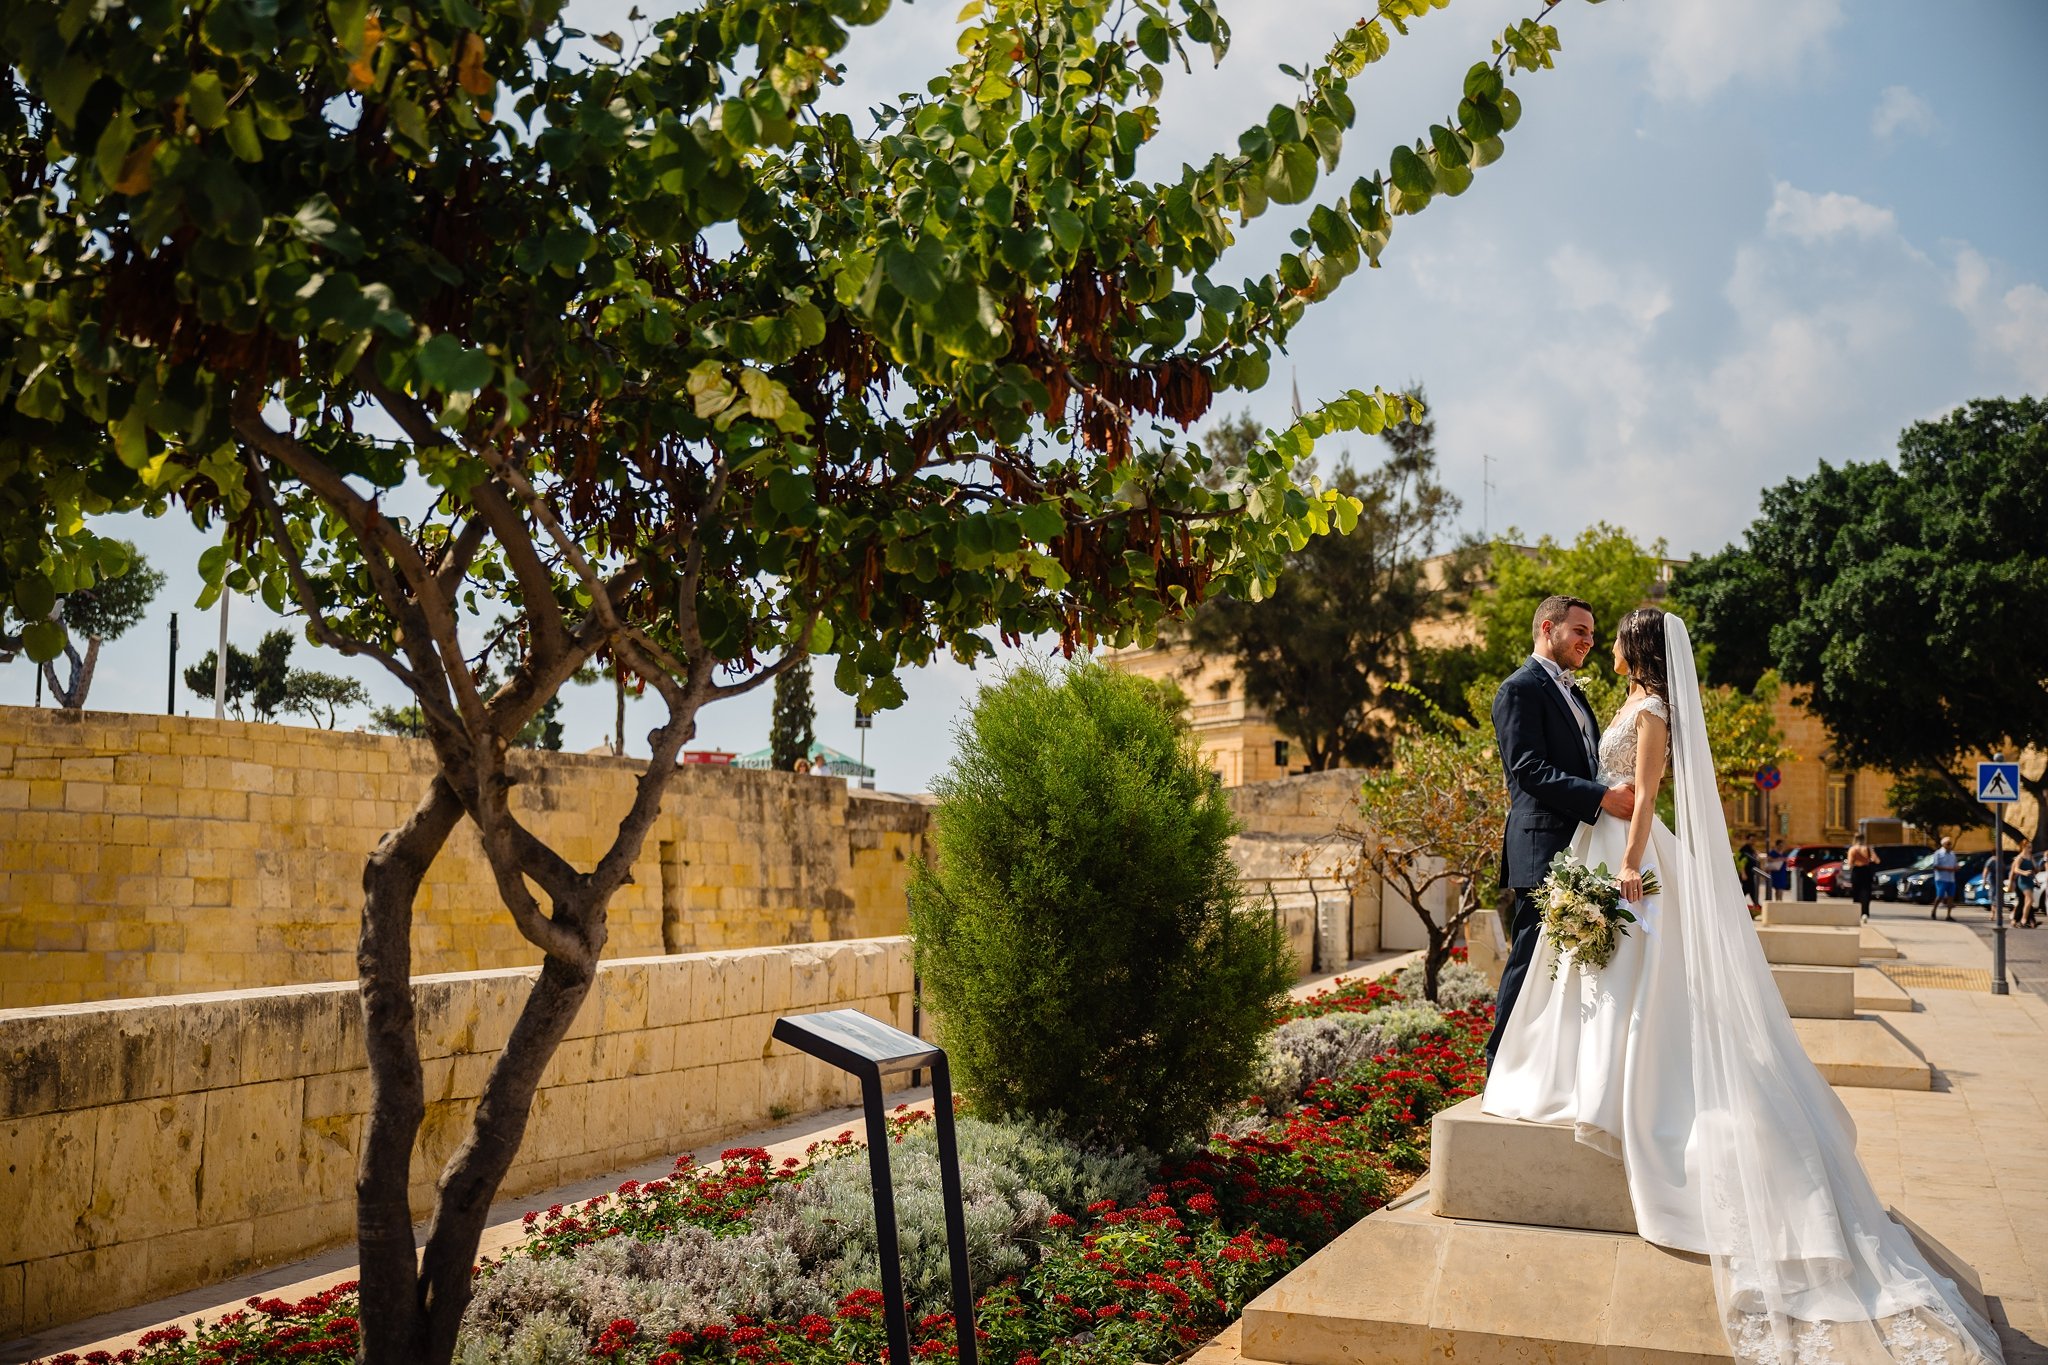 Desiree and Andrei's Wedding at Villa Mdina Naxxar_0051.jpg